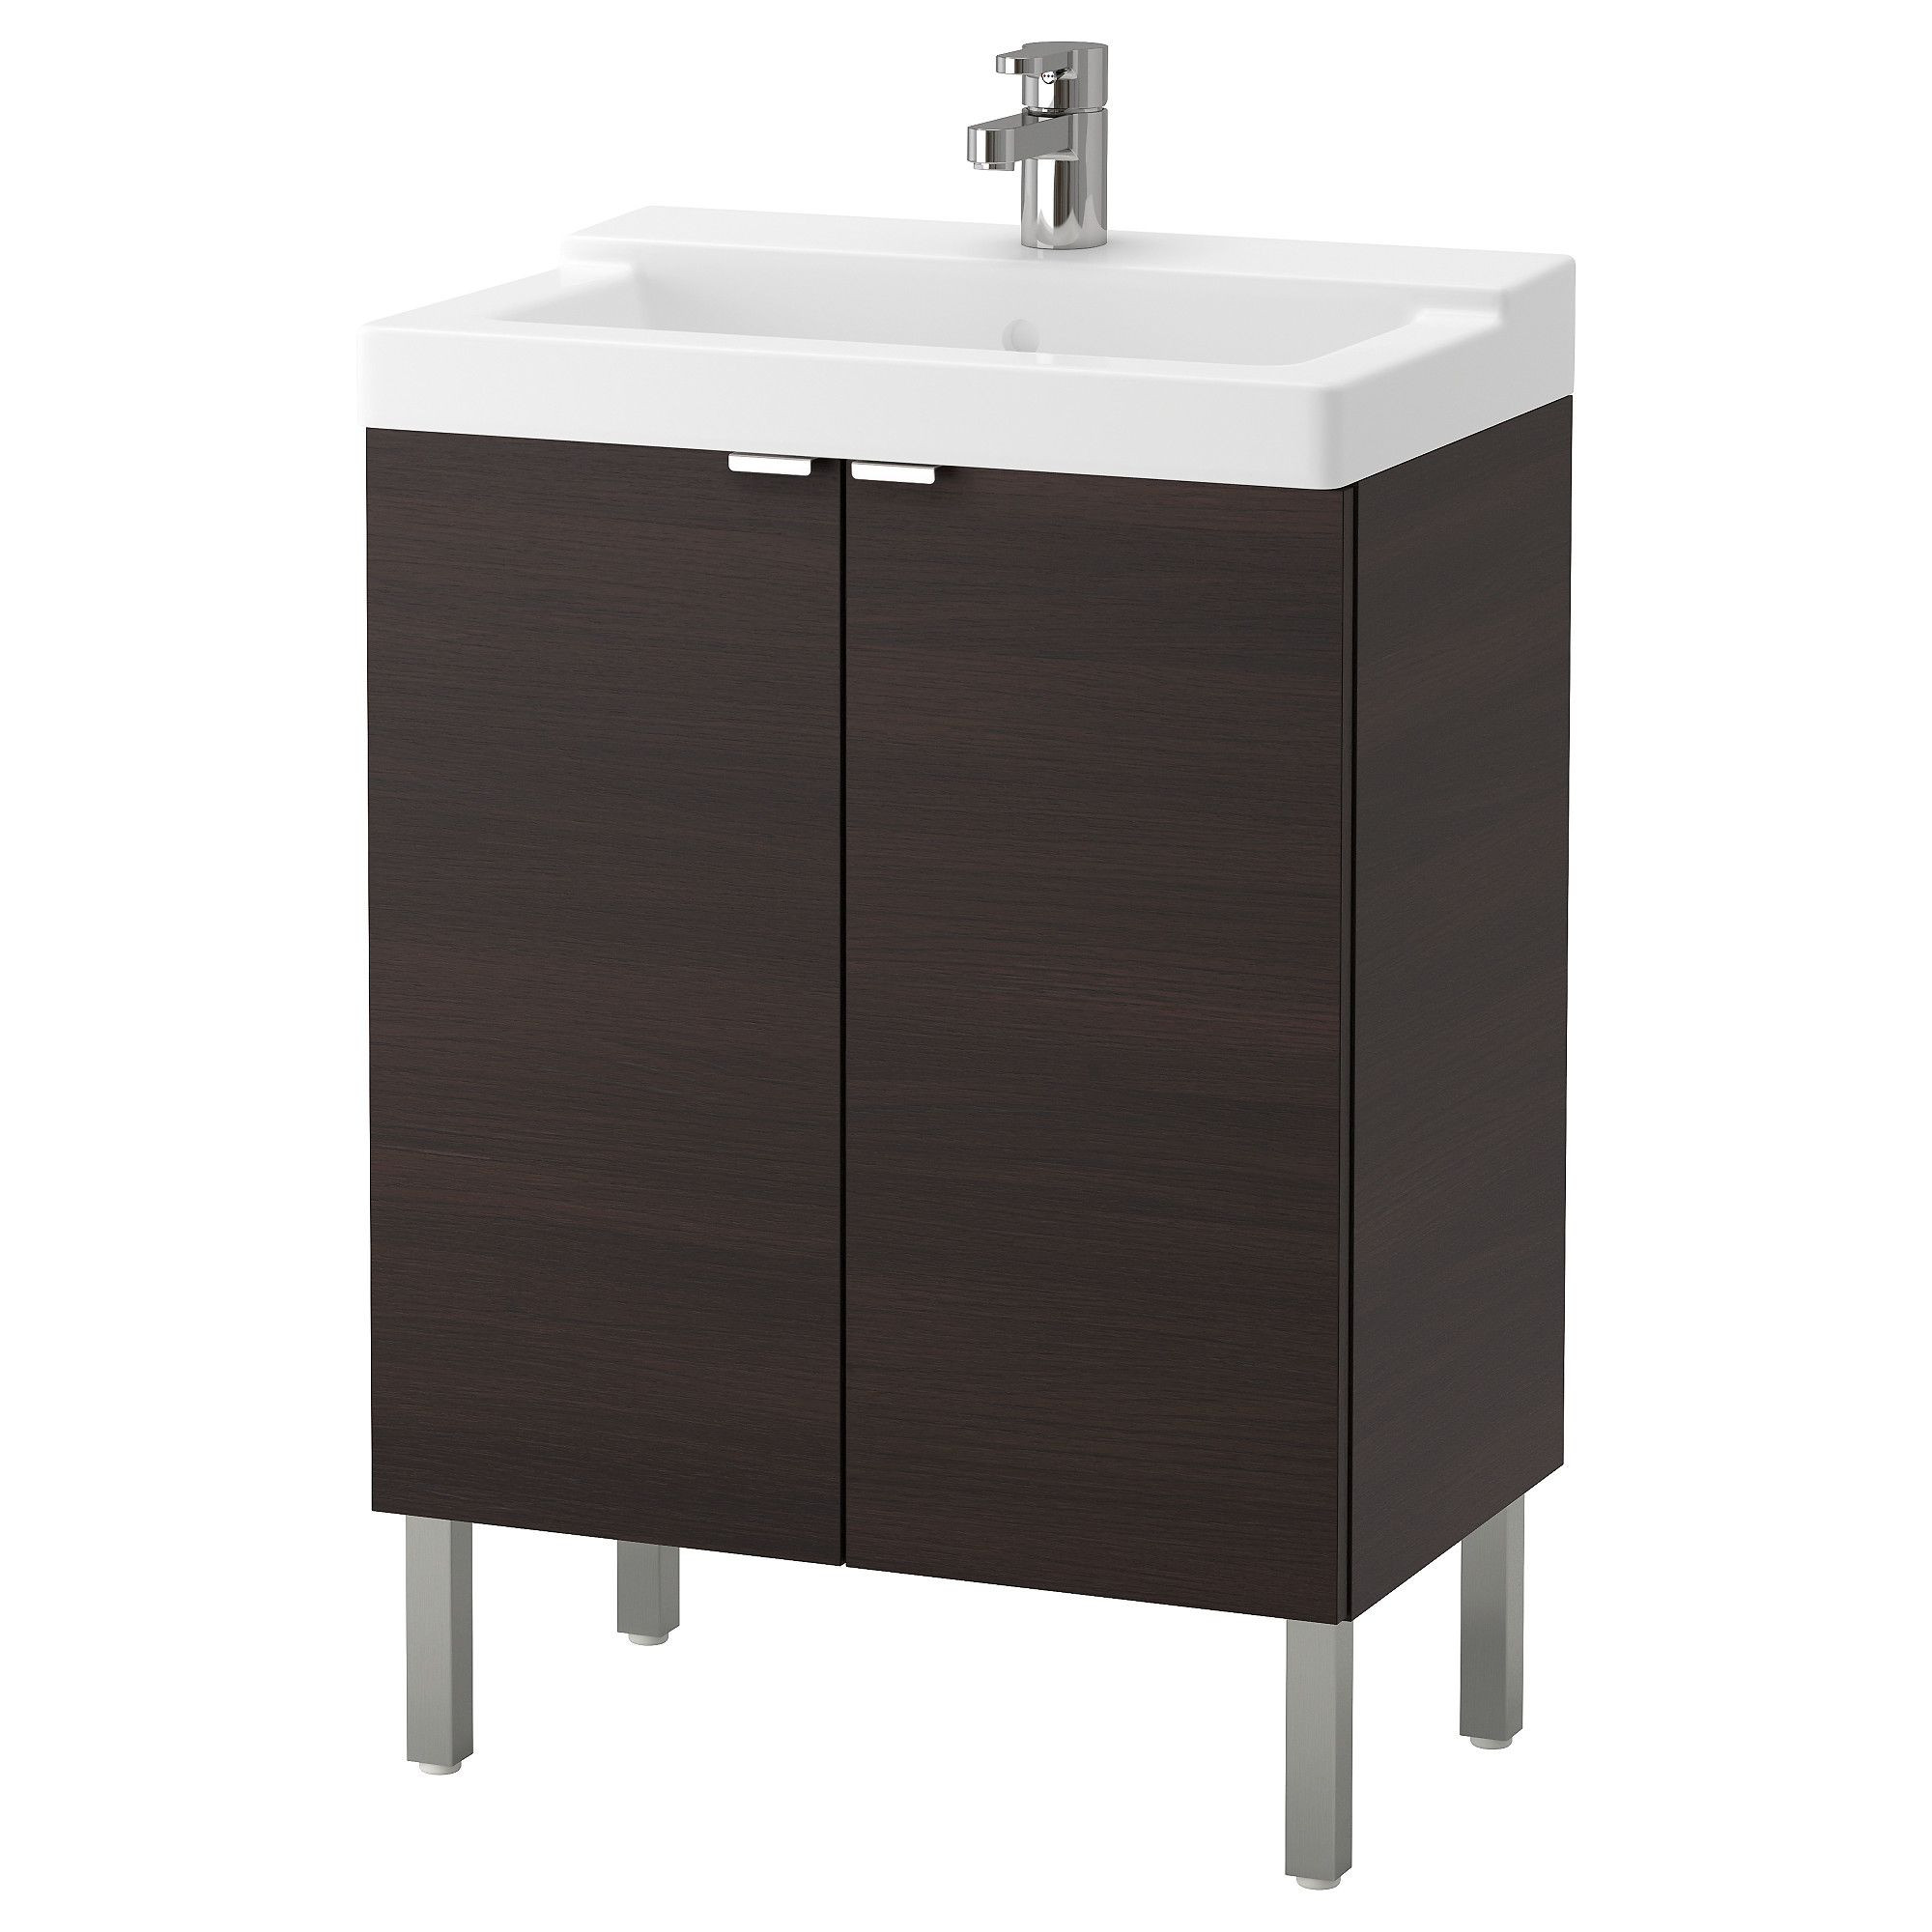 30 Inch Bathroom Vanity Ikea
 US Furniture and Home Furnishings